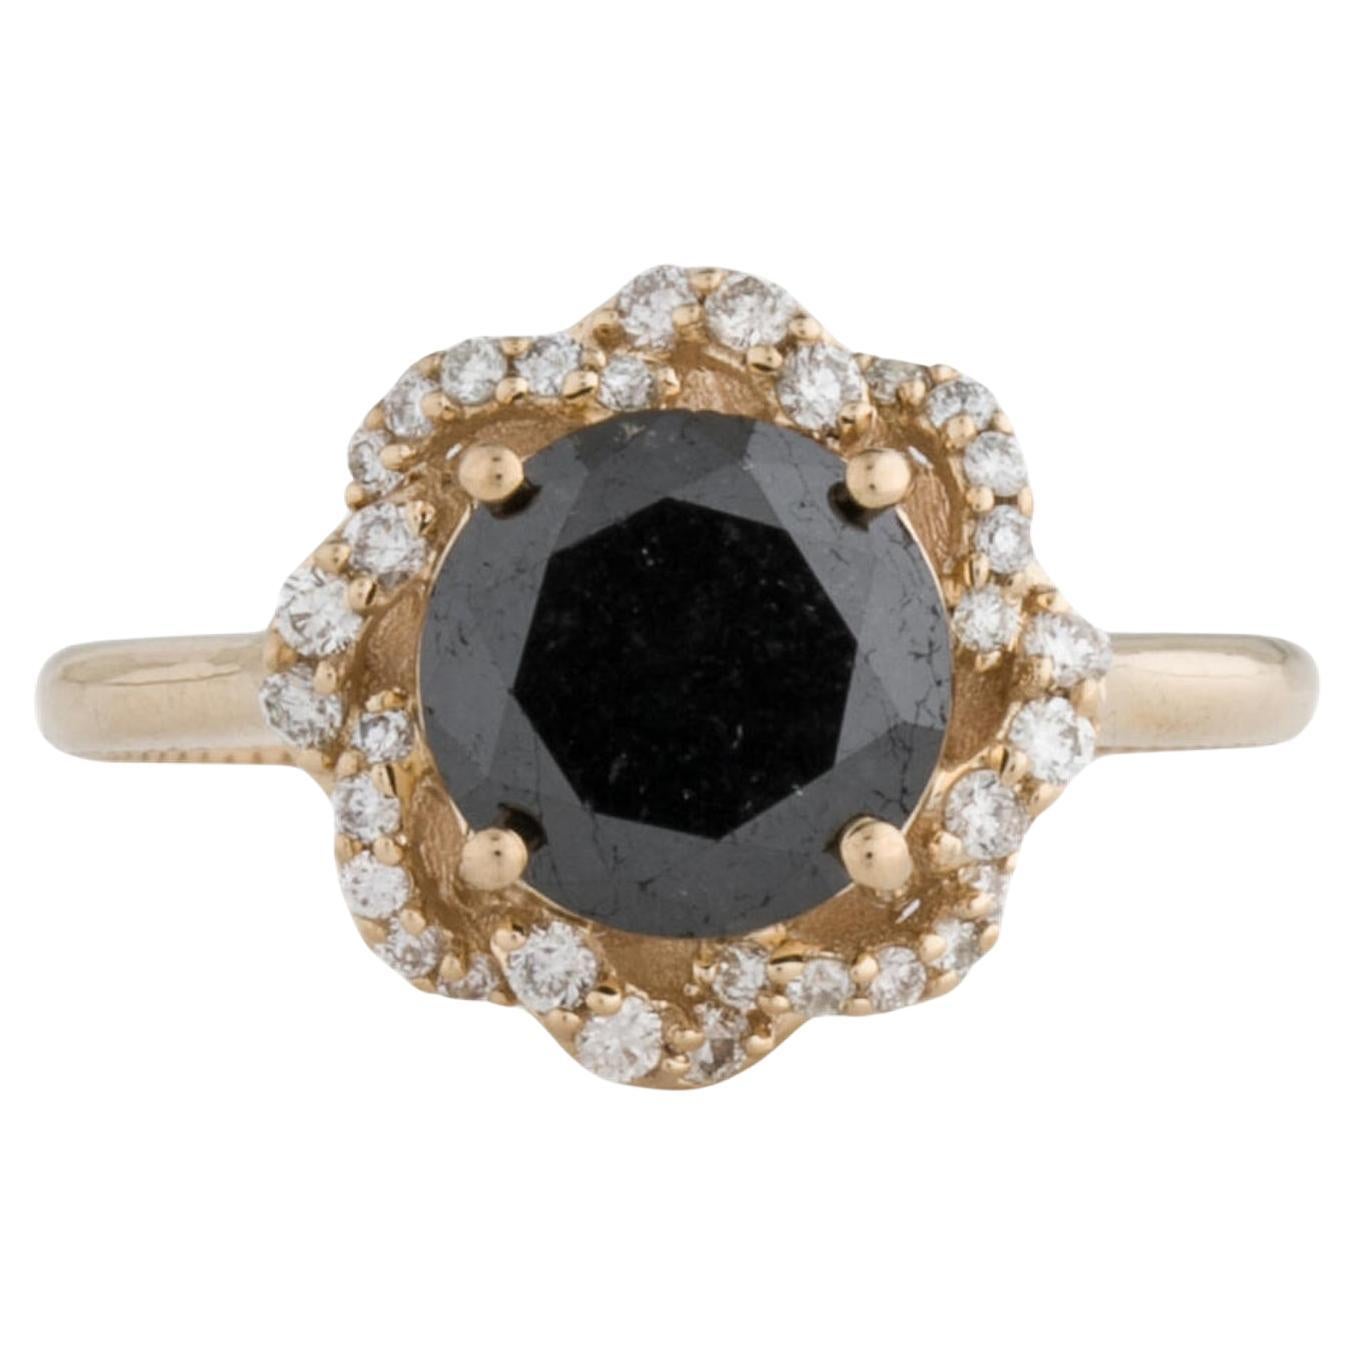 Elegant 14K Diamond Cocktail Ring, 2.09ctw, Size 6.75 - Statement Jewelry Piece For Sale